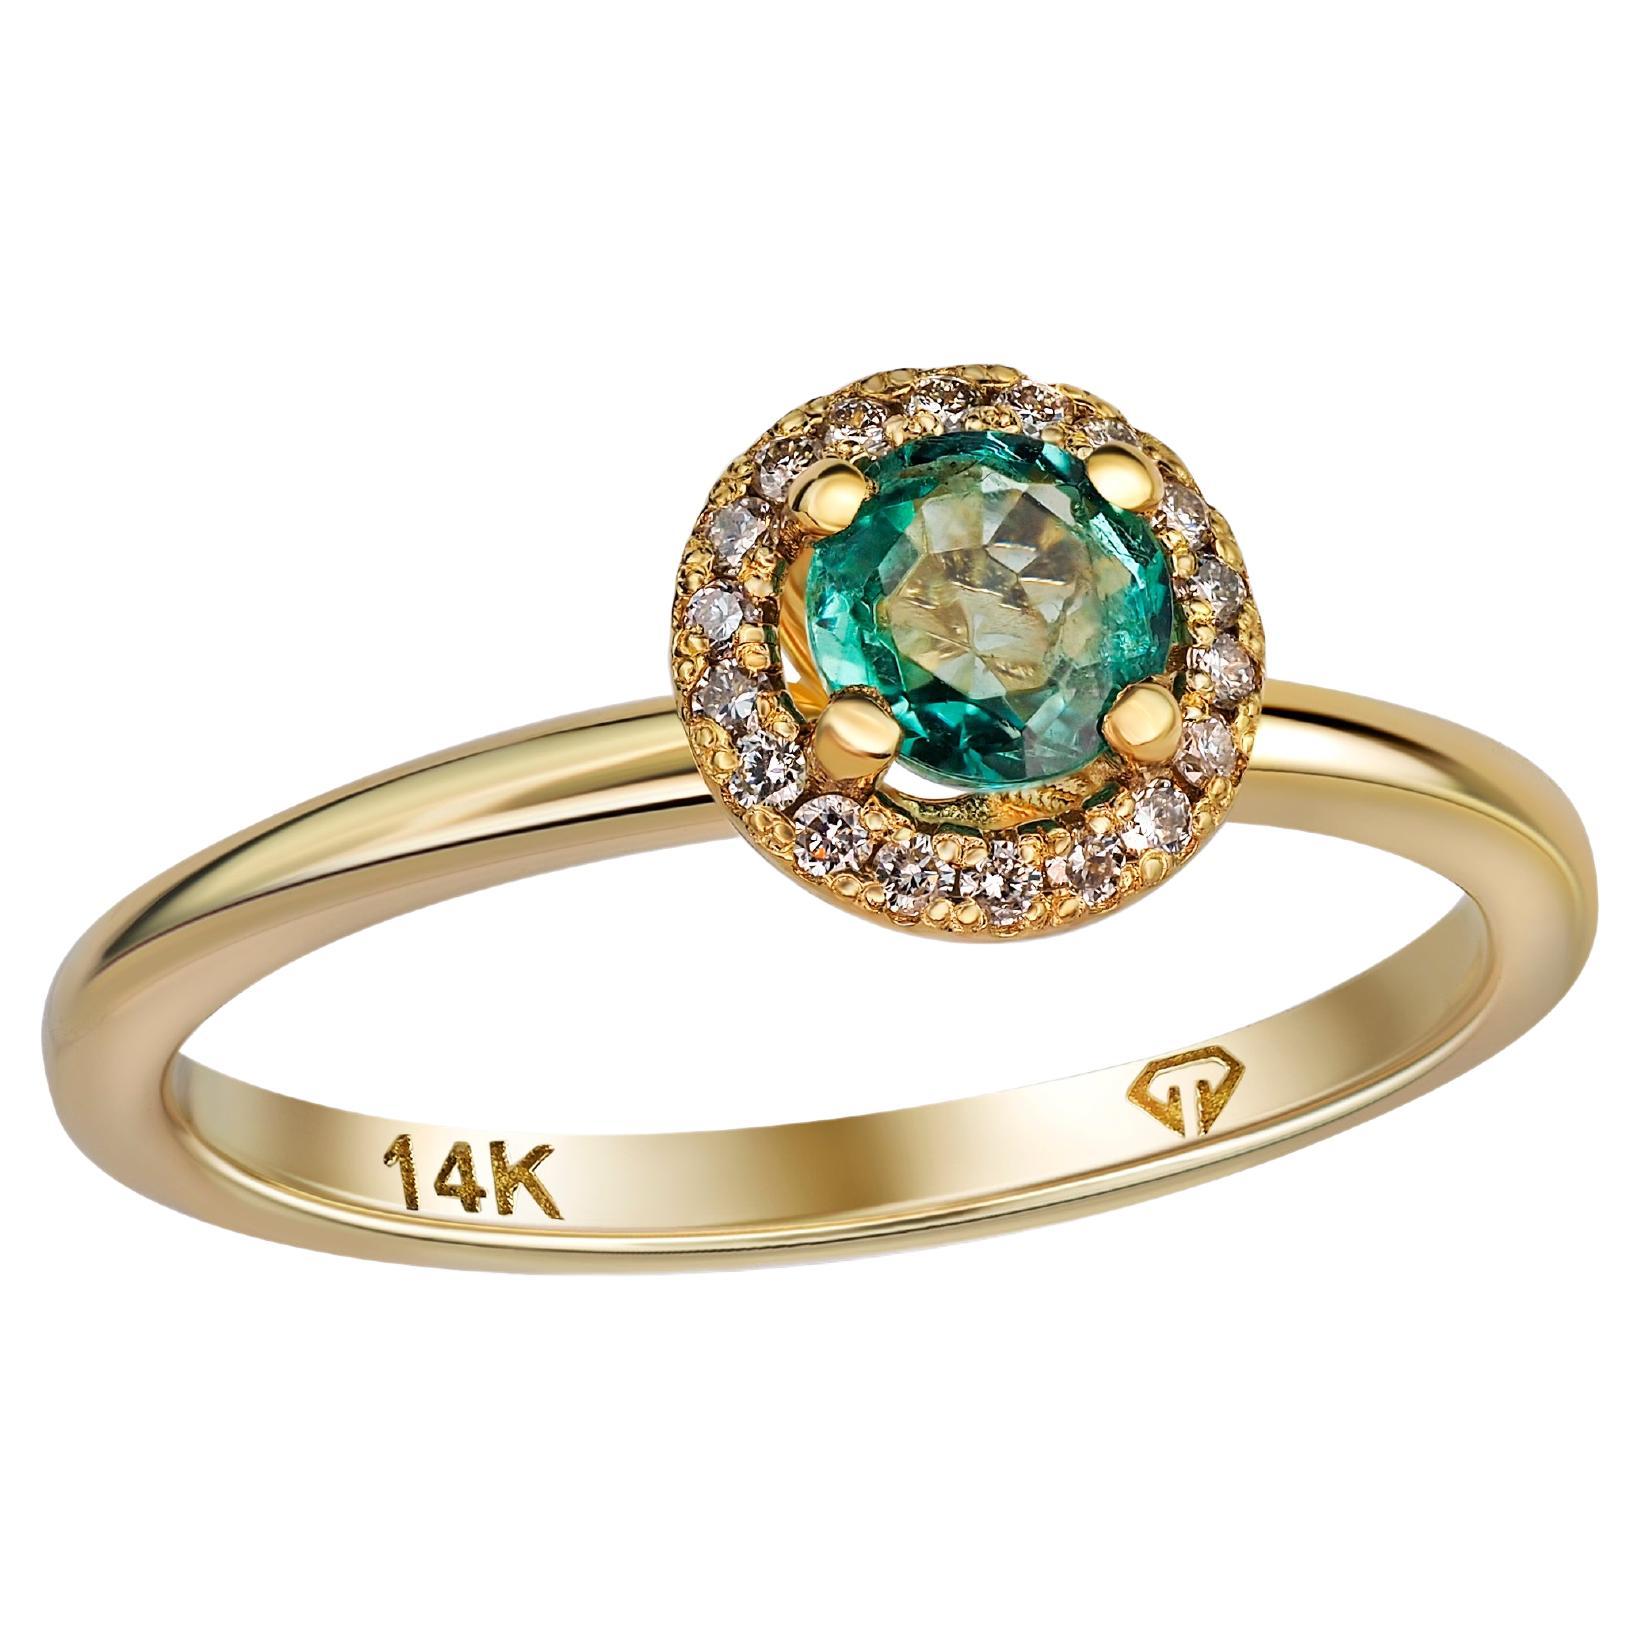 Smaragdring. Smaragdfarbener Verlobungsring. Ring aus Smaragdgold. Halo-Smaragdring mit Diamanten. Zierlicher Smaragdring. Echter Smaragdring.
Metallart: Gold, Gelbgold
Metall-Stempel: 14k Gold
Größe: US -7.5
Gewicht: 2 g
Zentraler